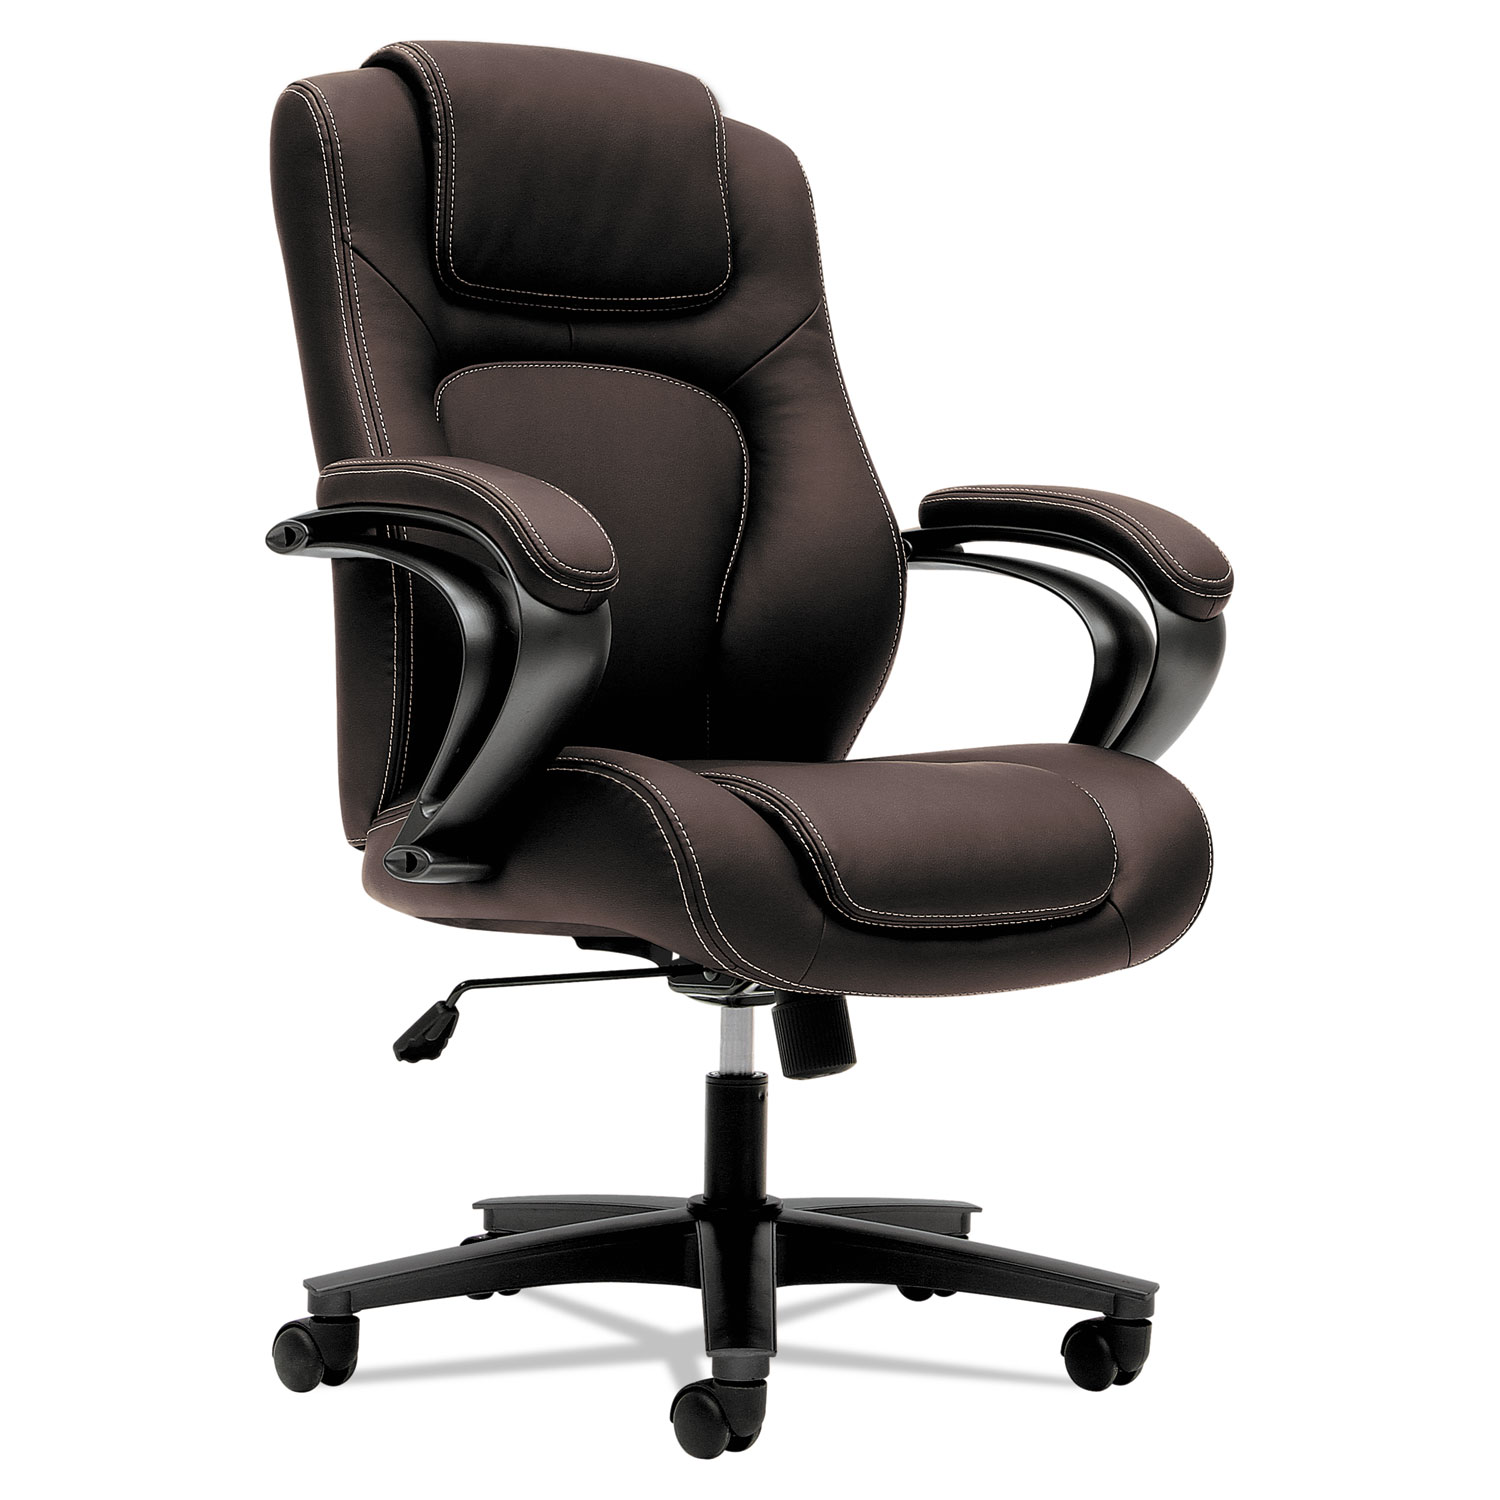 VL402 Series Executive High-Back Chair, Brown Vinyl